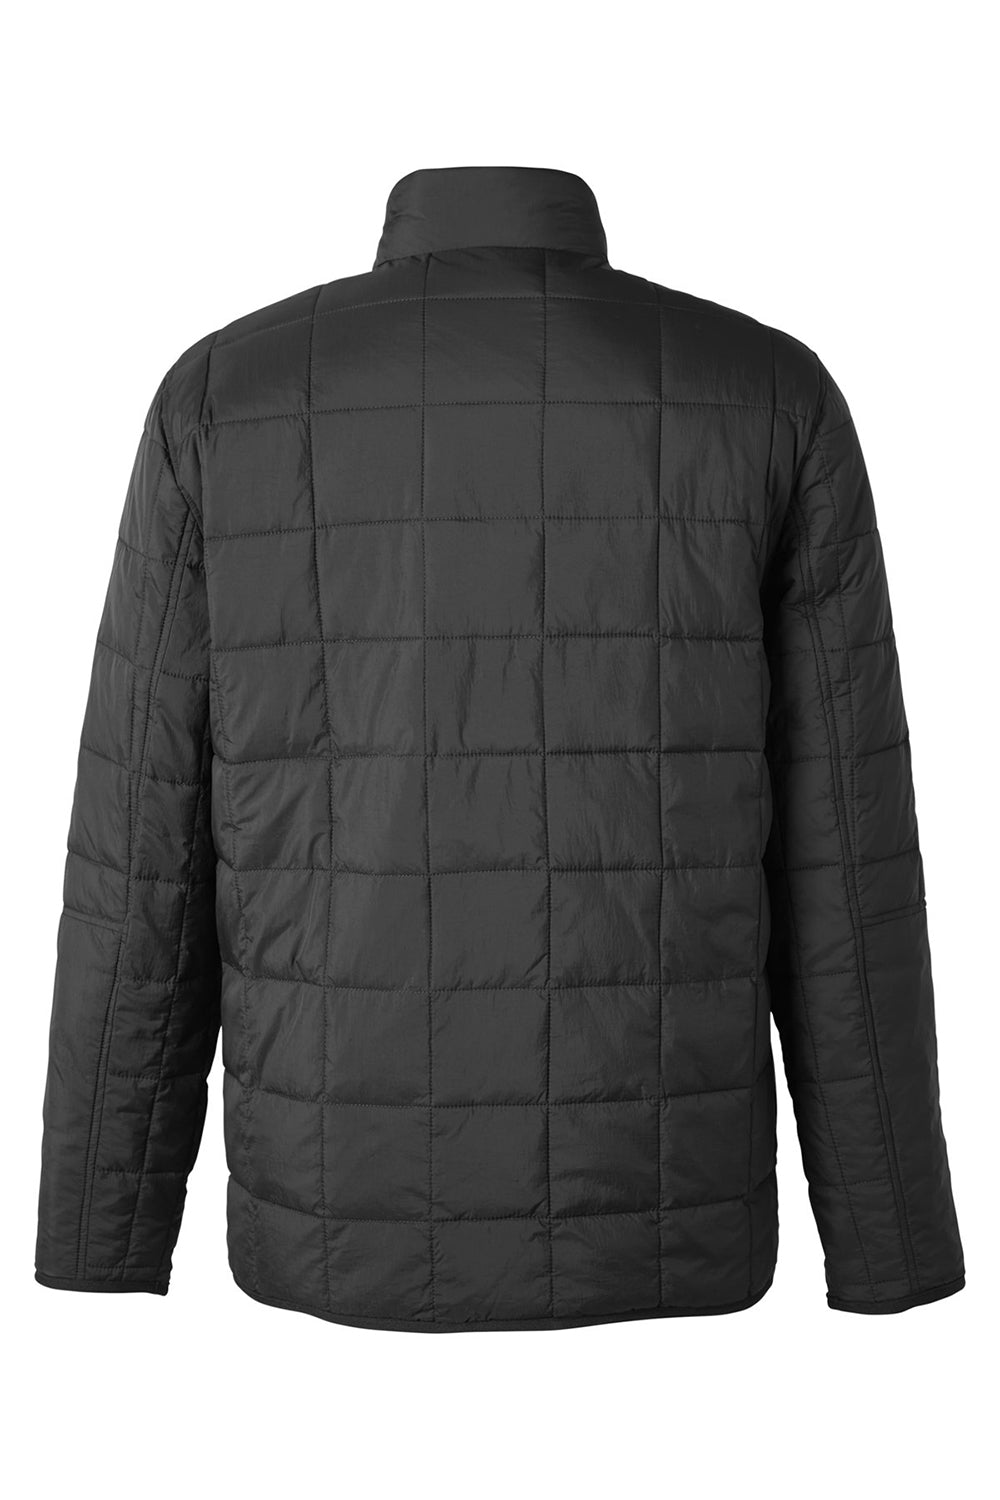 North End NE721 Mens Aura Fleece Lined Full Zip Jacket Black Flat Back